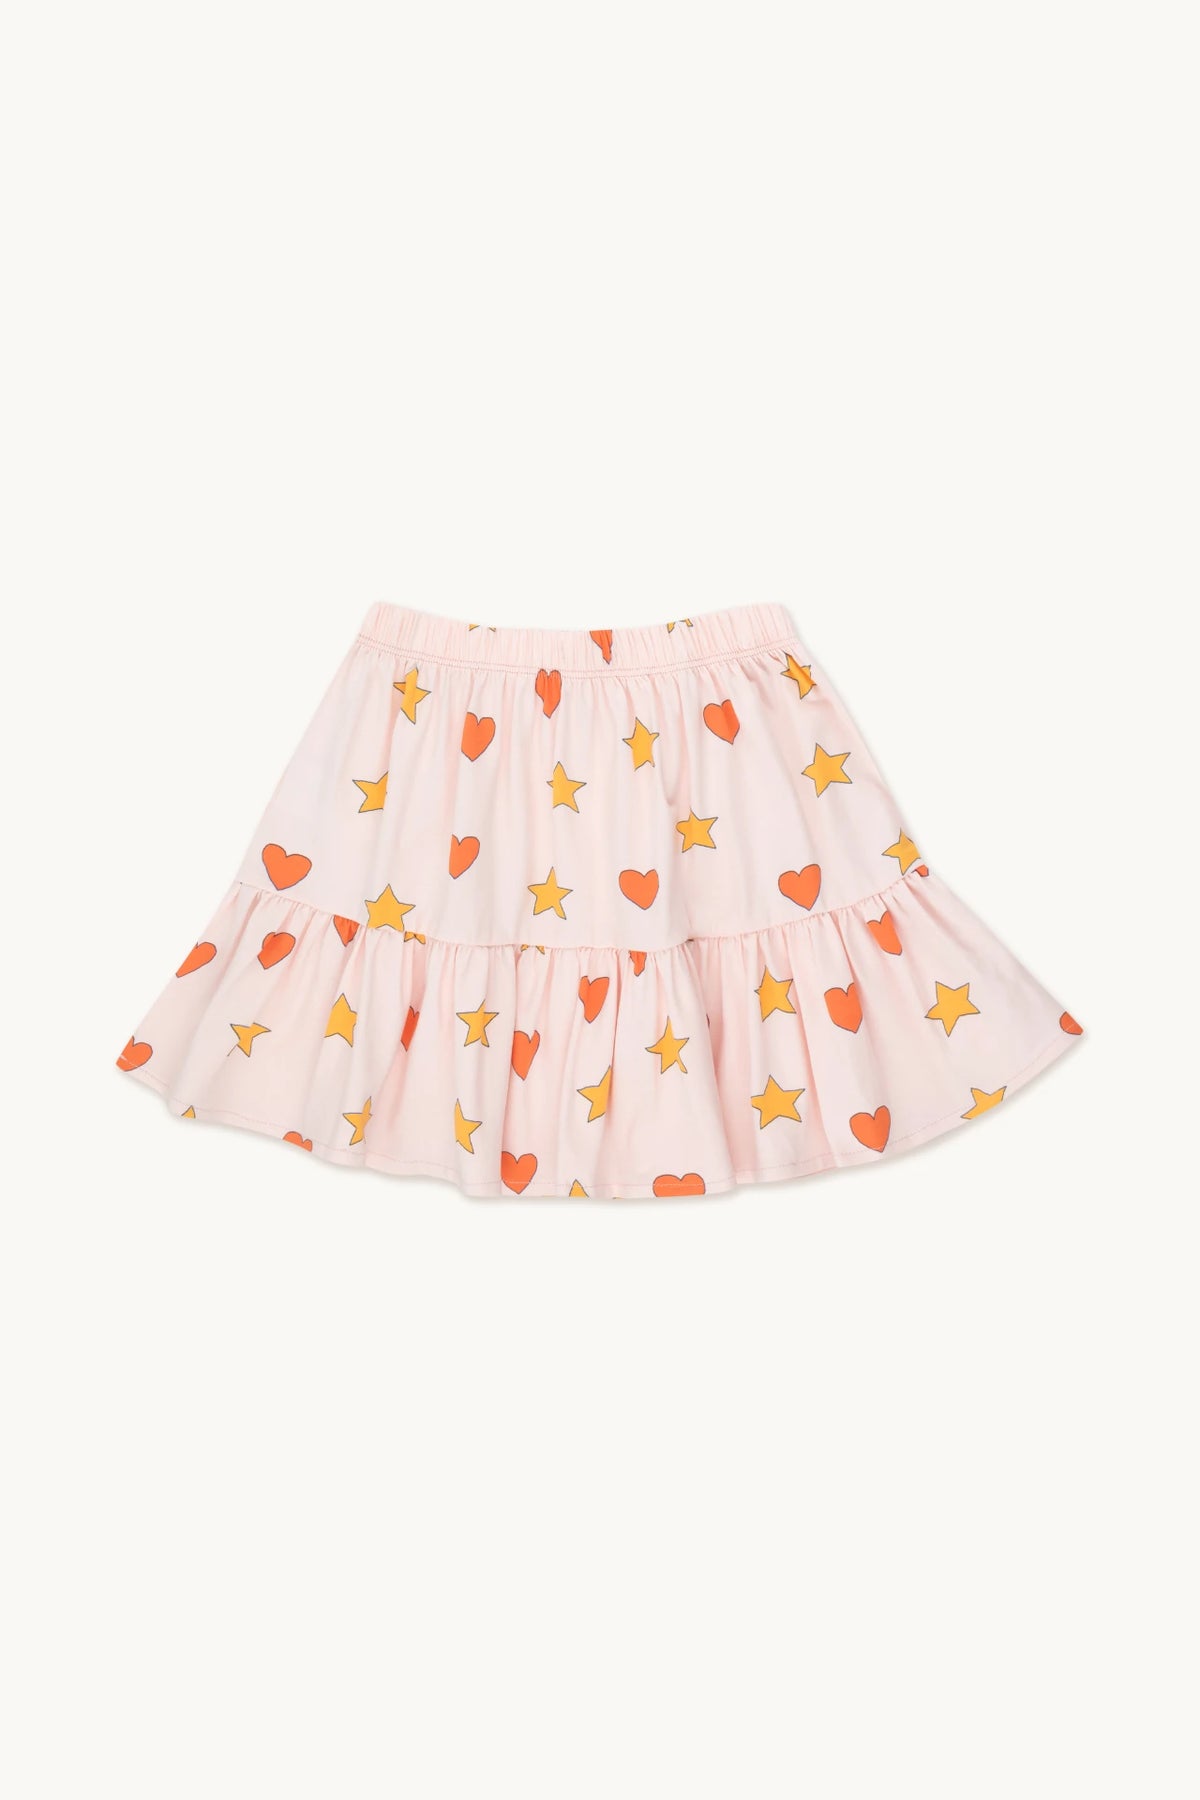 tiny cottons hearts stars skirt - pastel pink